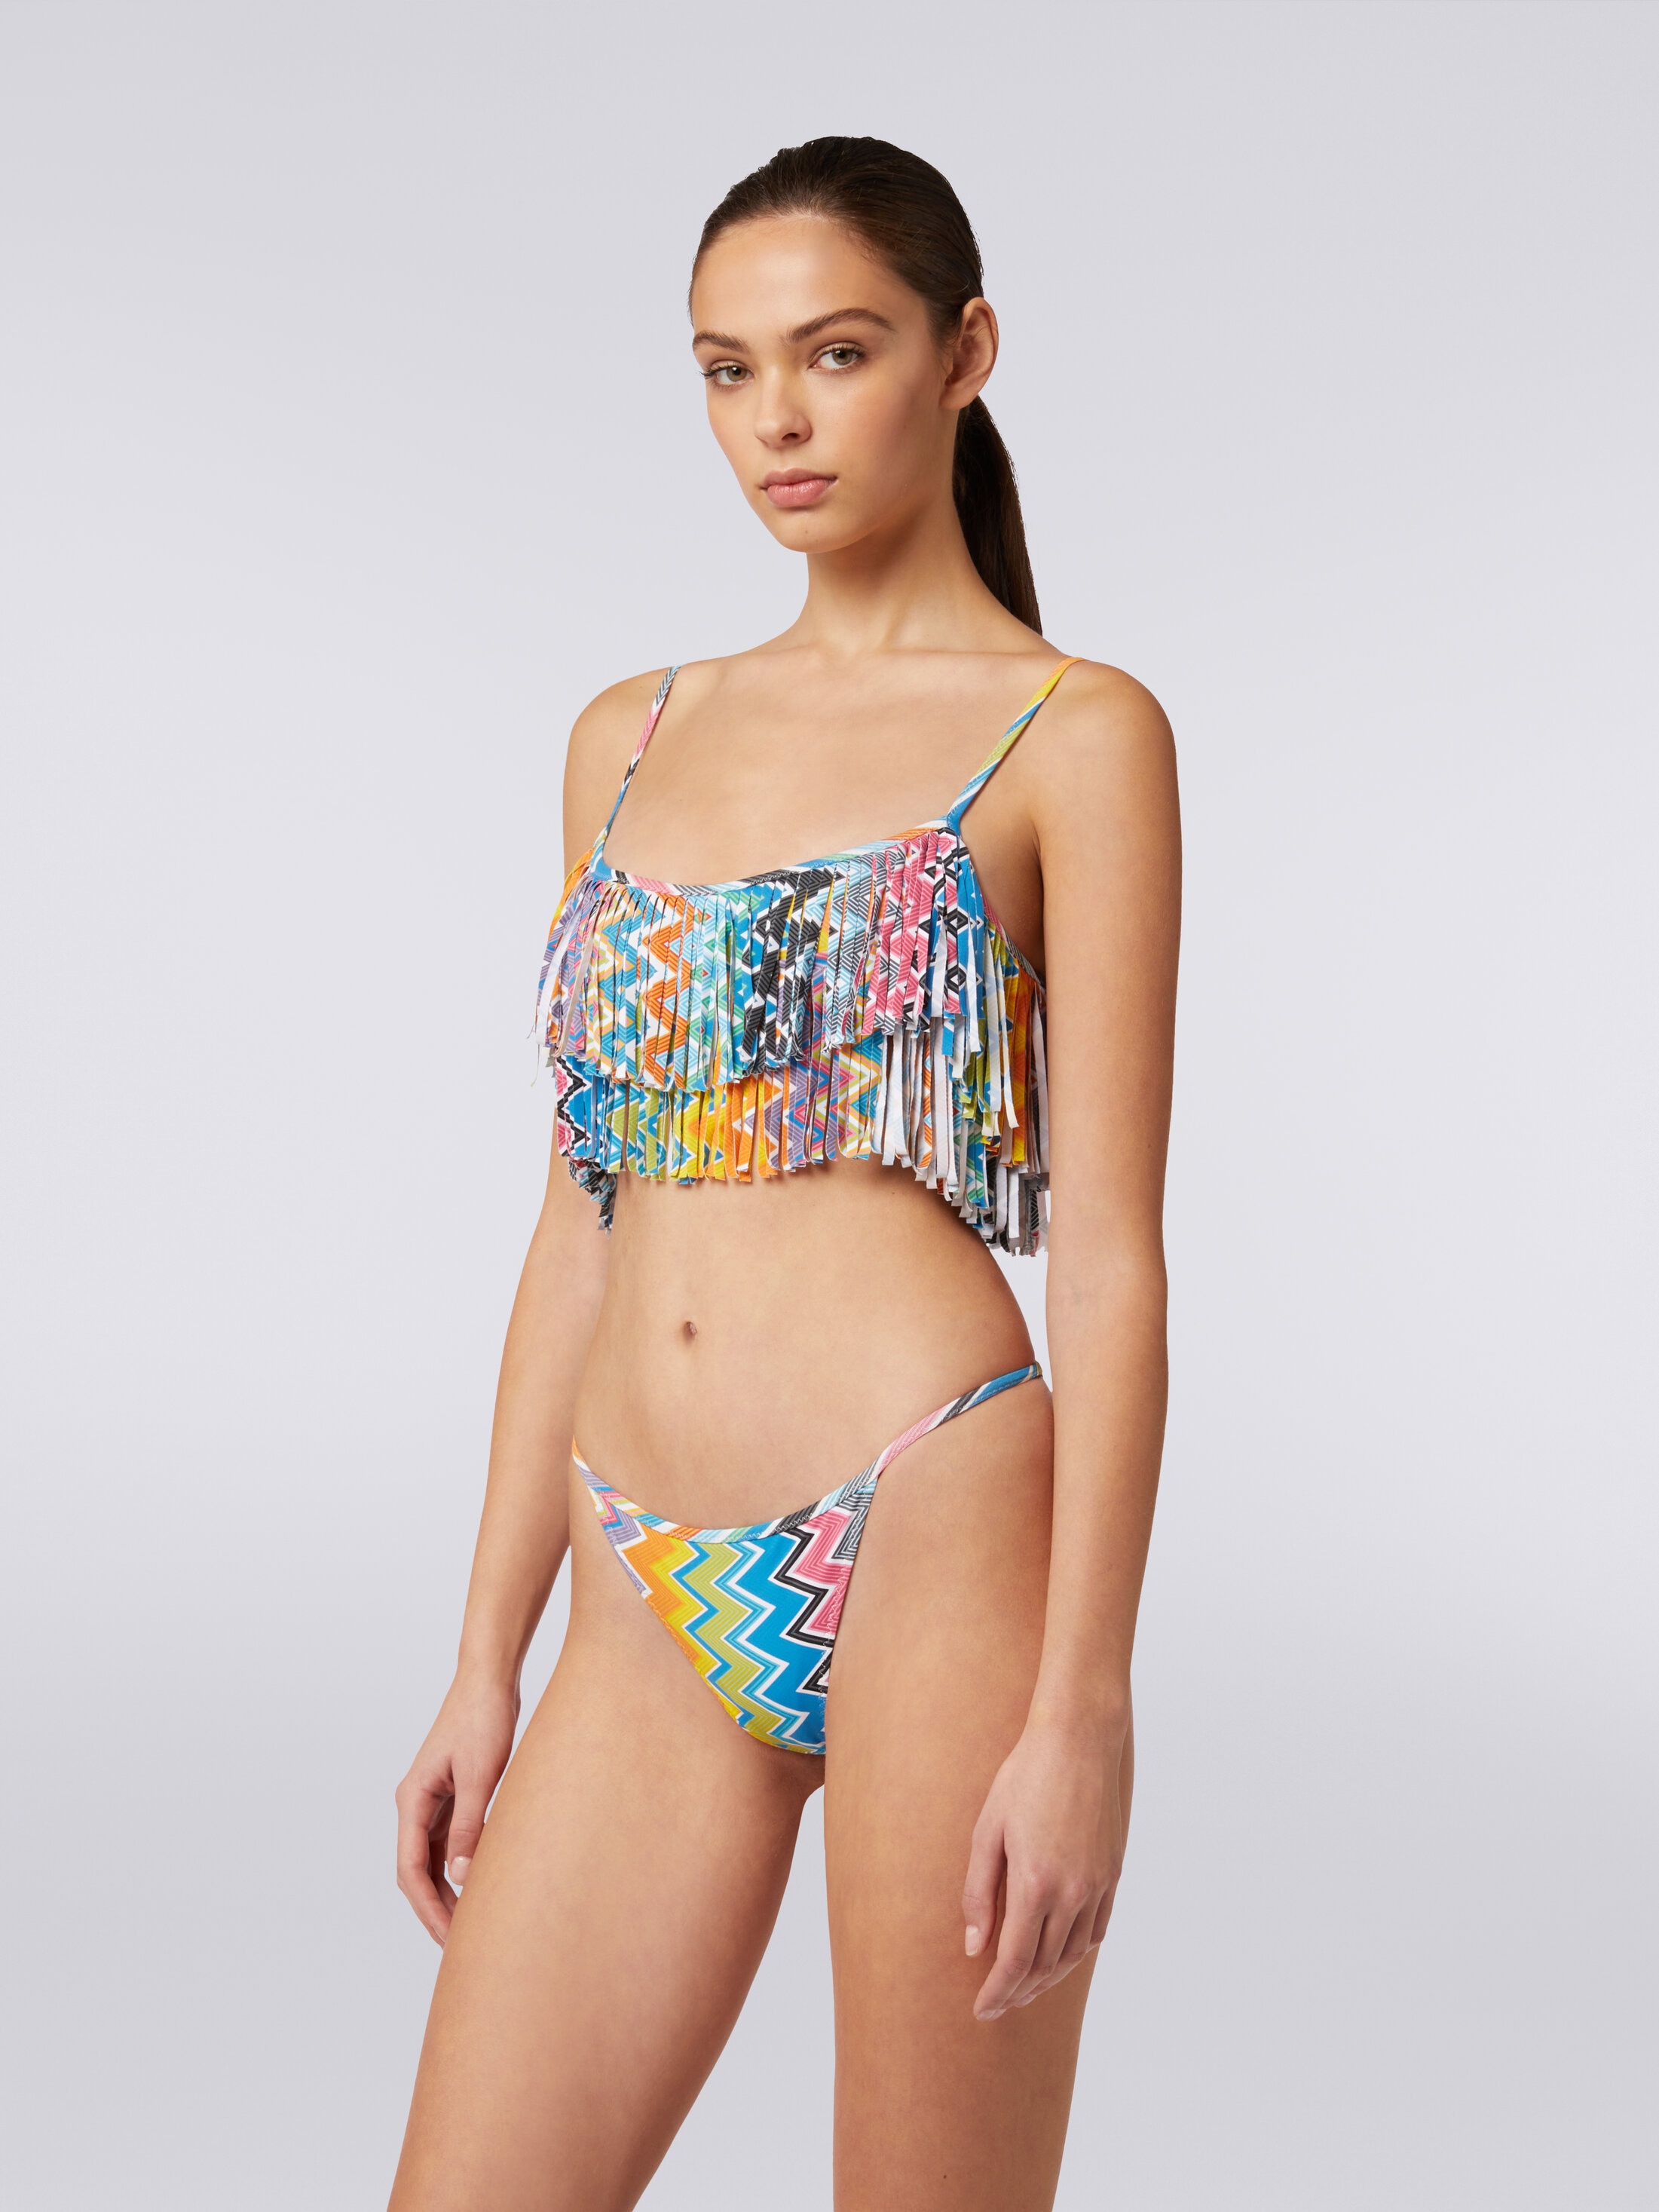 Printed stretch fabric bikini with fringed top